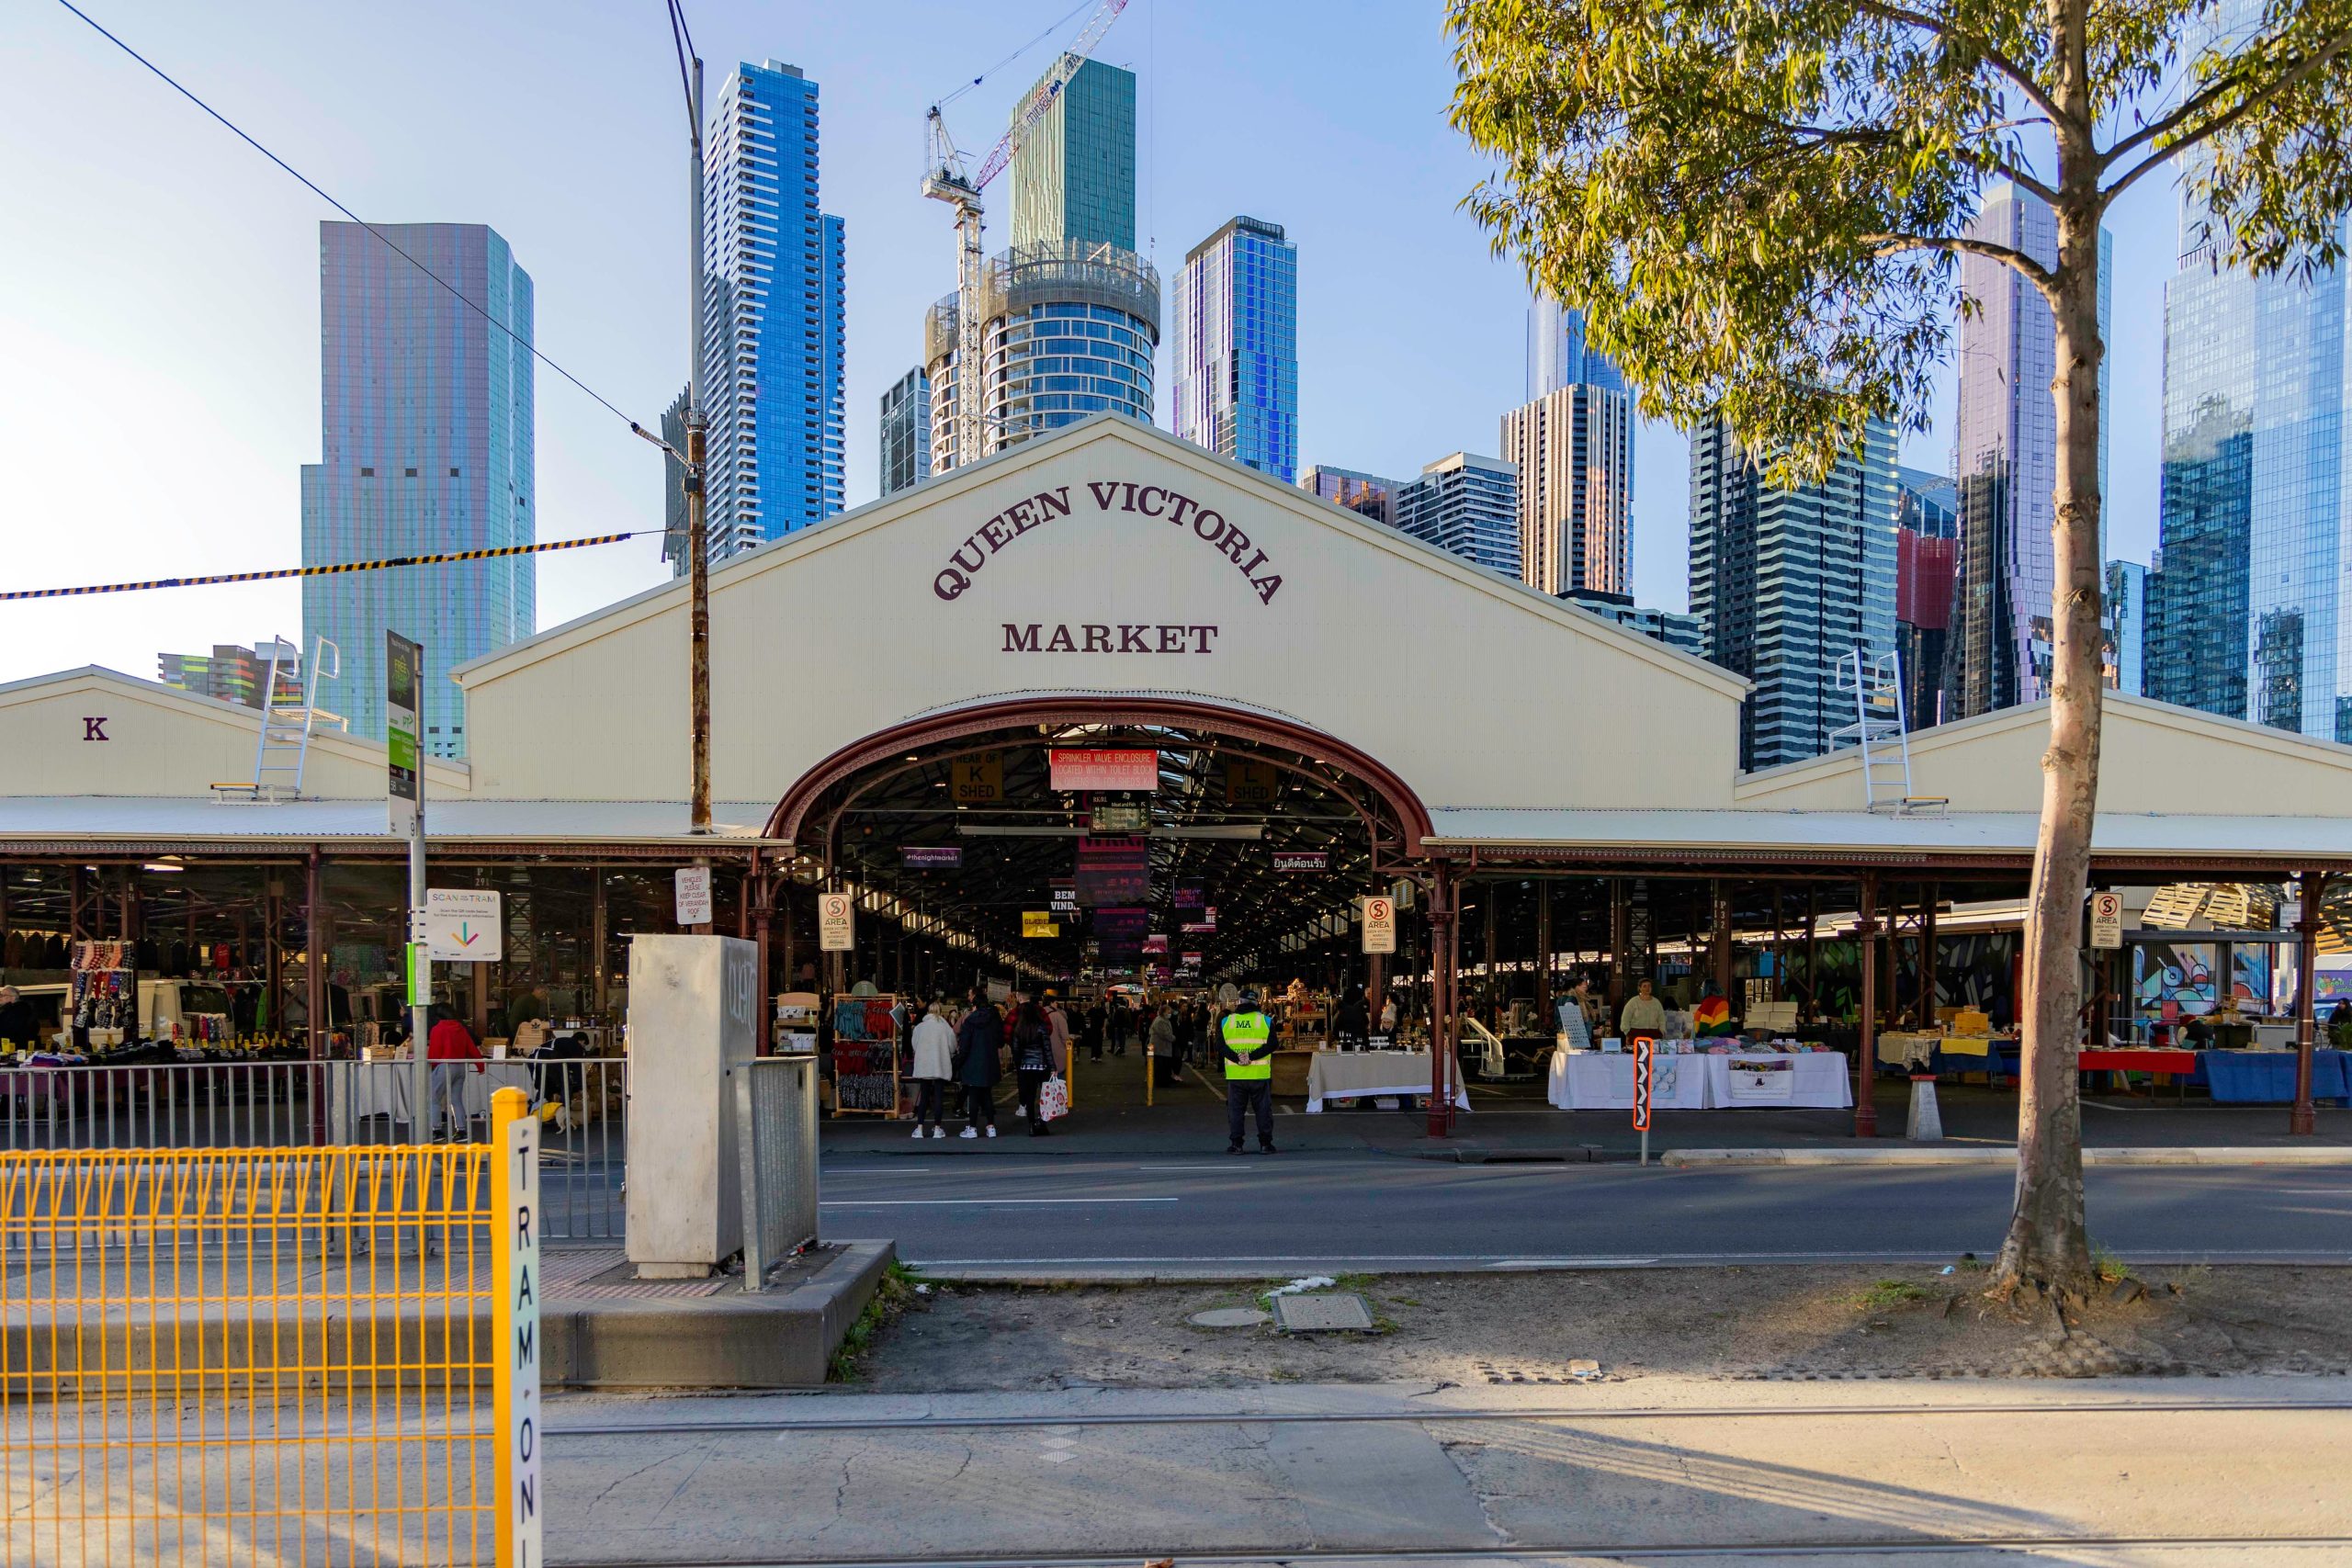 Queen Victoria Market in Melbourne, Australia.